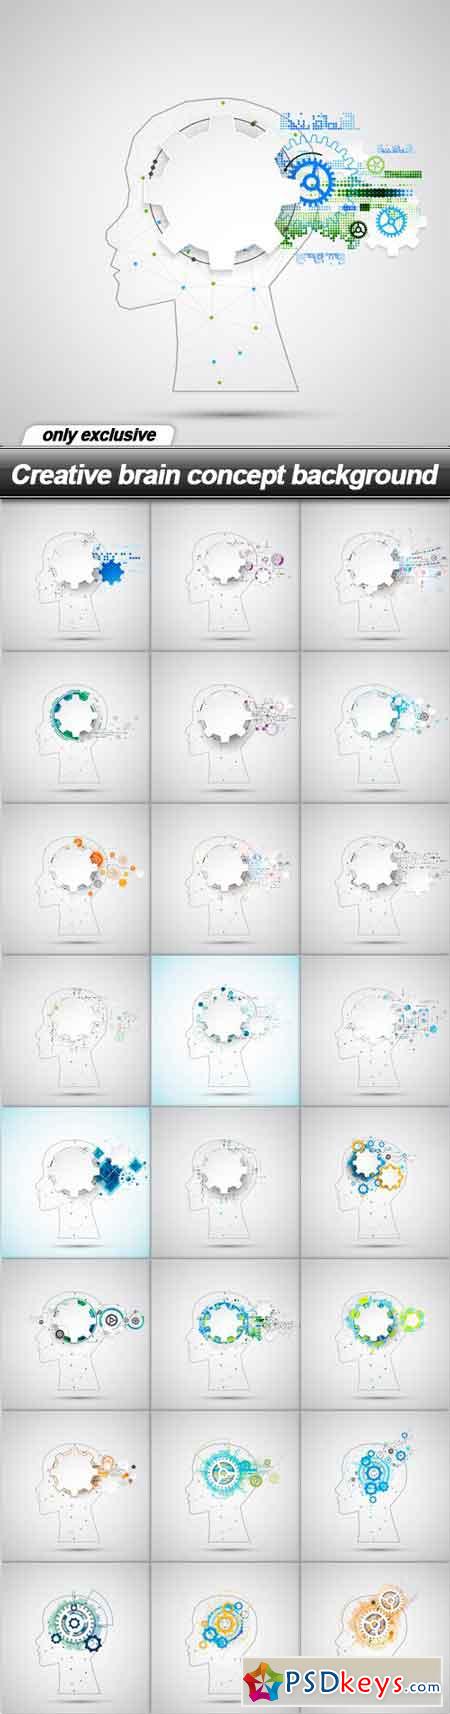 Creative brain concept background - 25 EPS